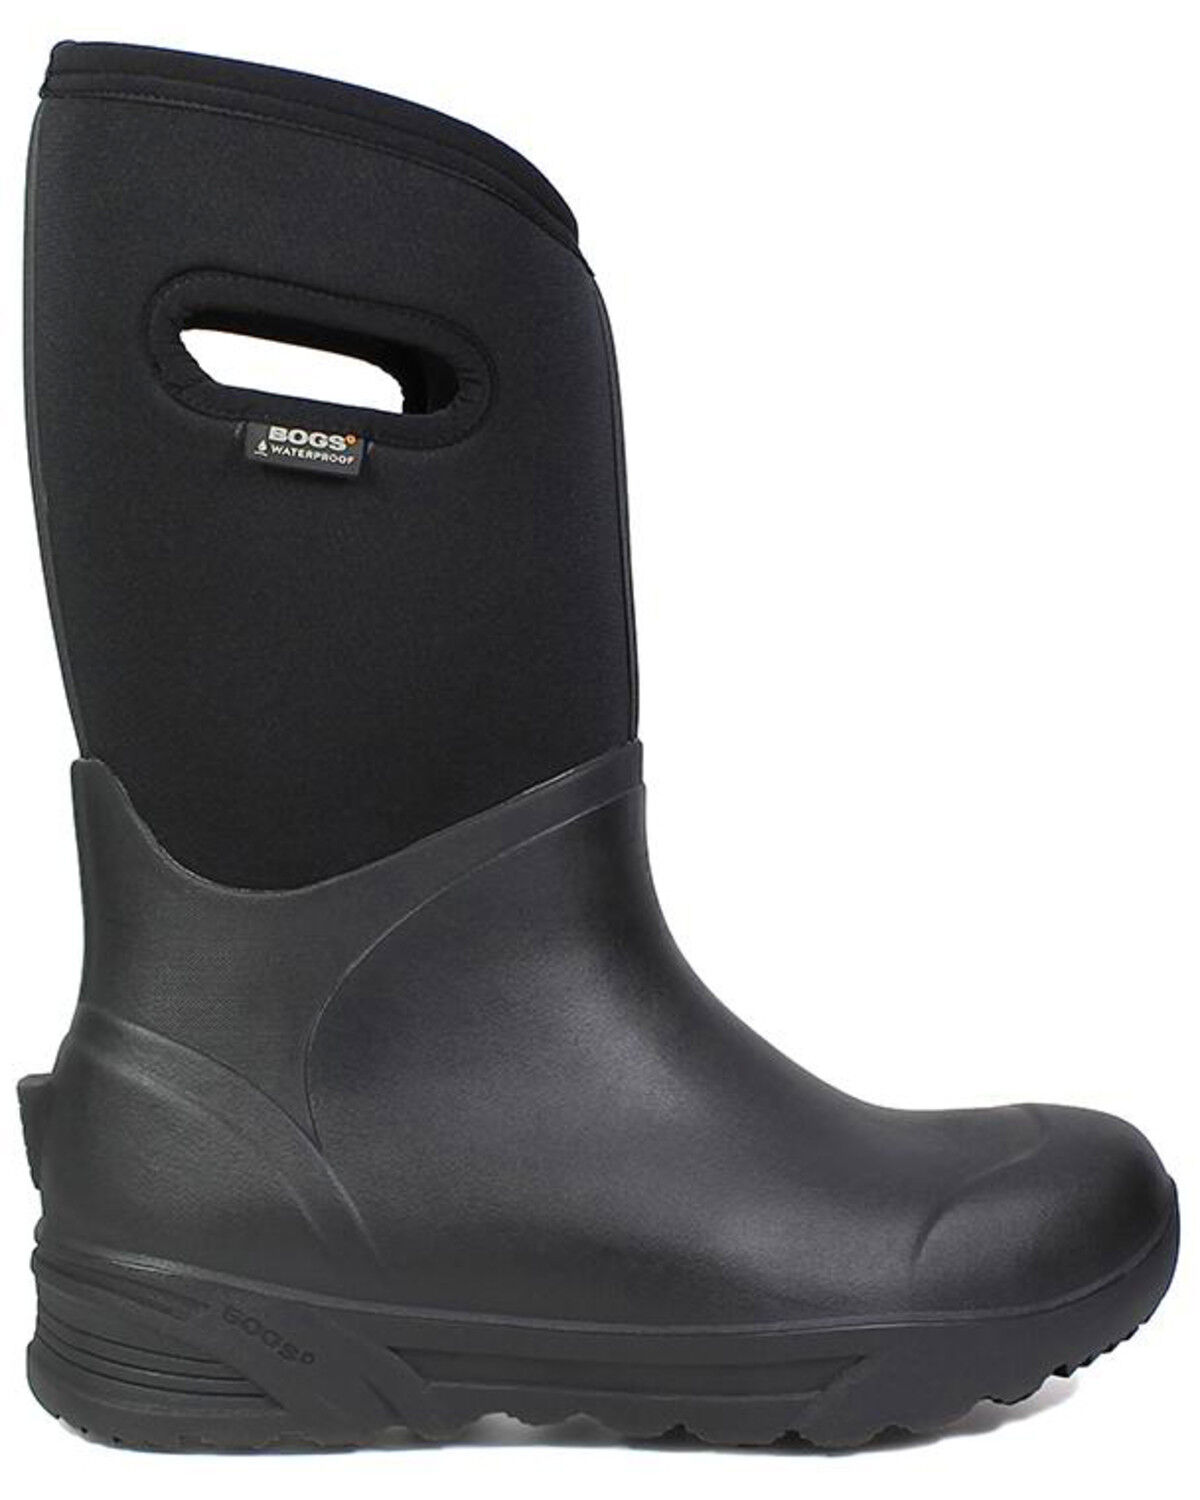 black insulated waterproof work boots